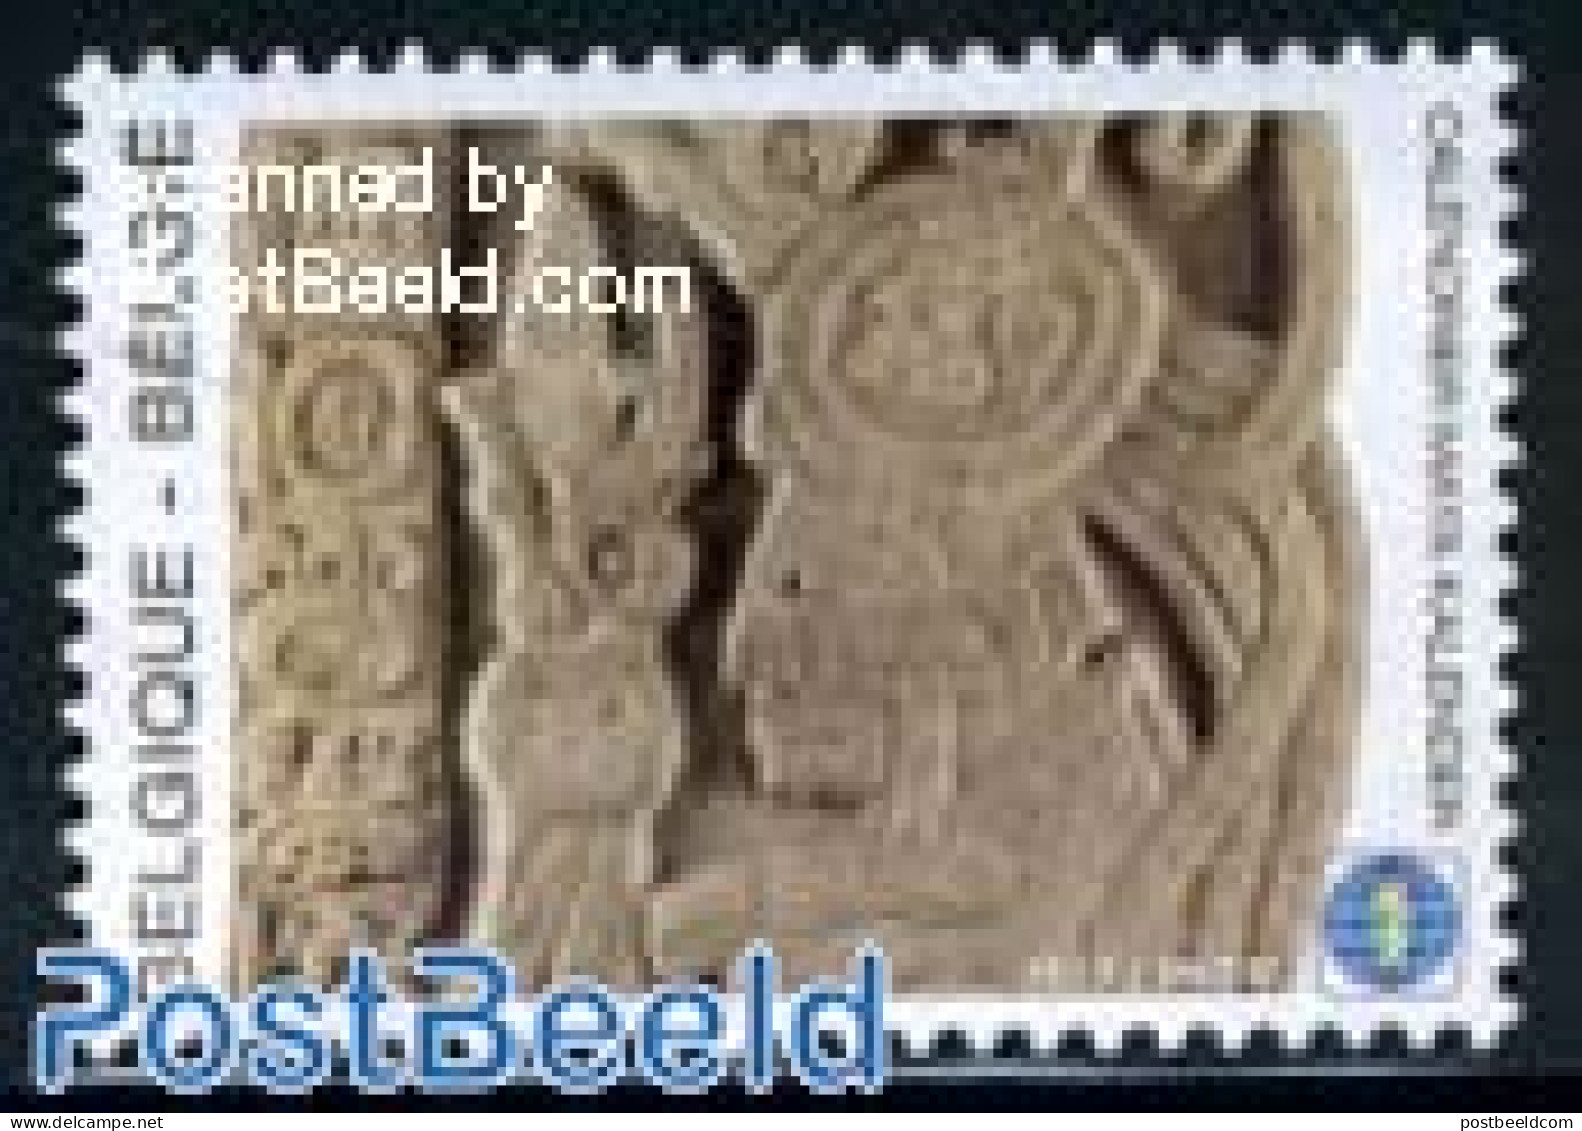 Belgium 2012 Maya Calendar 1v, Mint NH, Science - Weights & Measures - Art - Sculpture - Nuovi